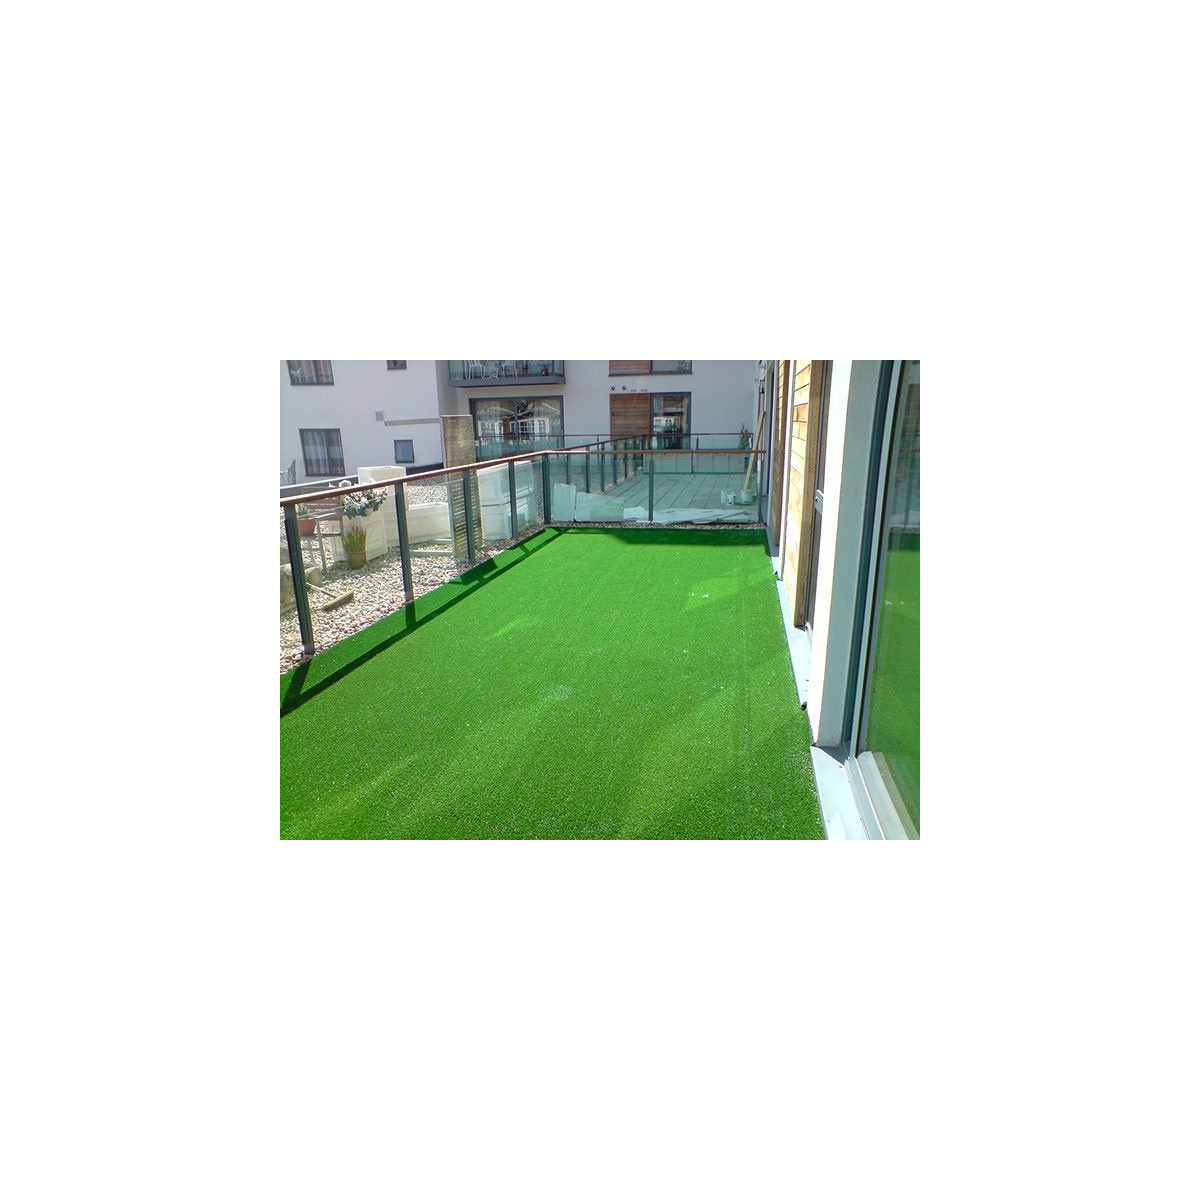 133x400 cm Balkonový travní koberec Summer s nopy